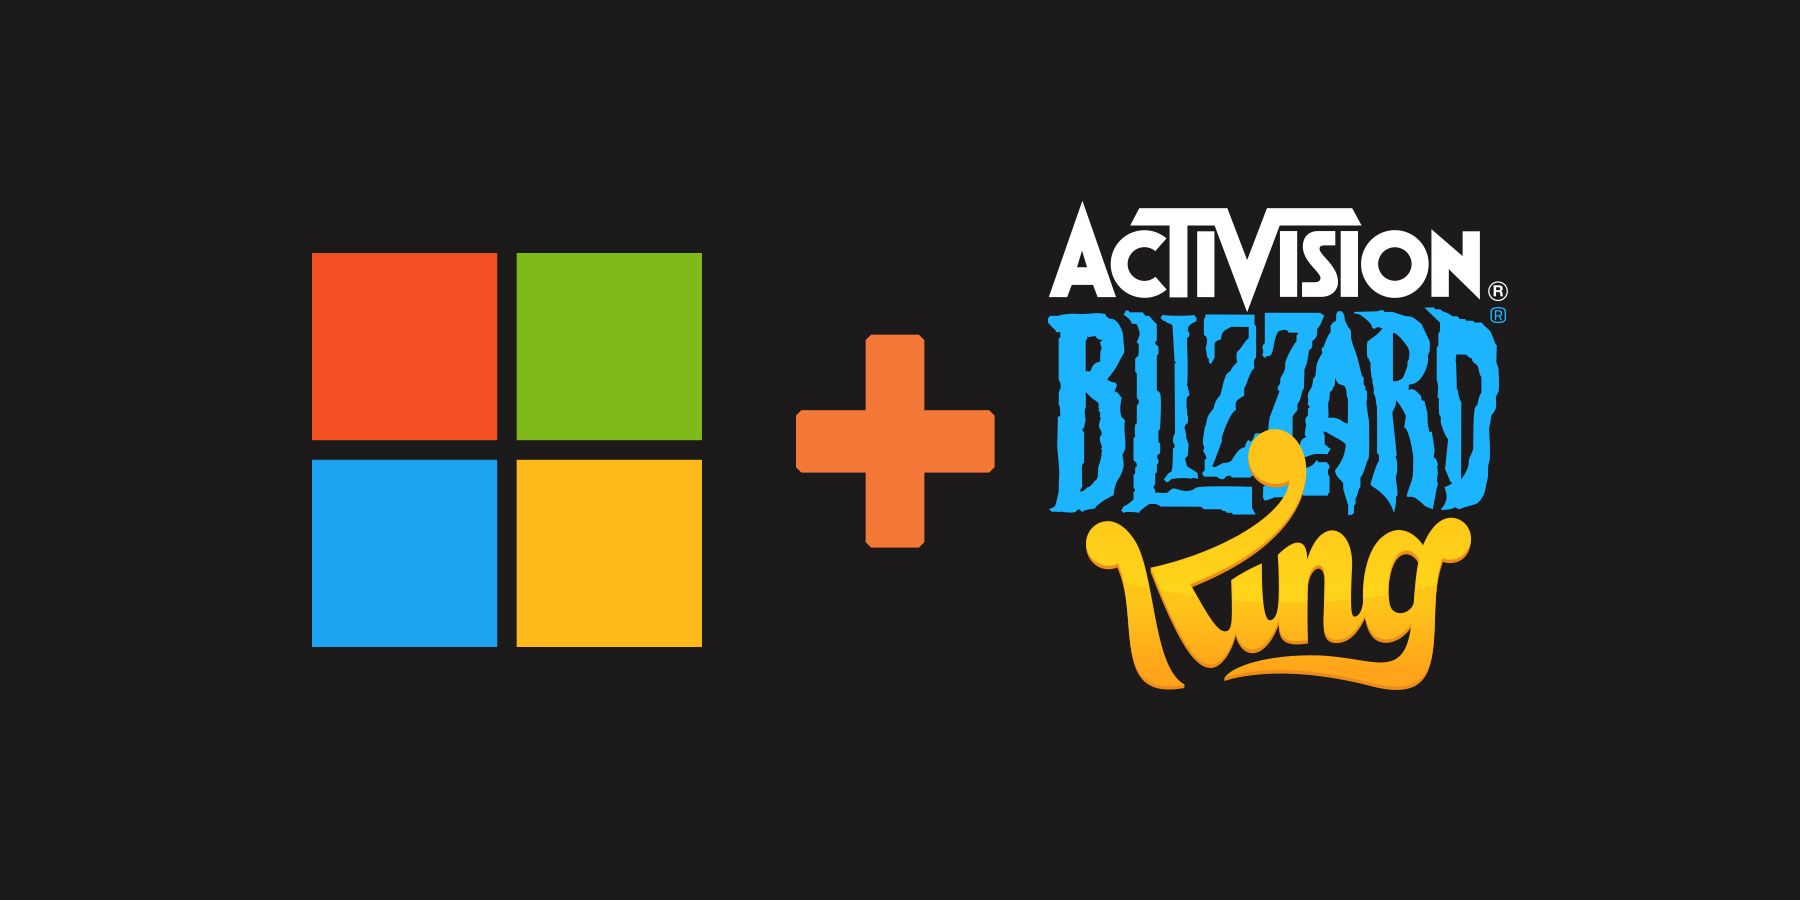 Microsoft plus Activision Blizzard King merger illustration